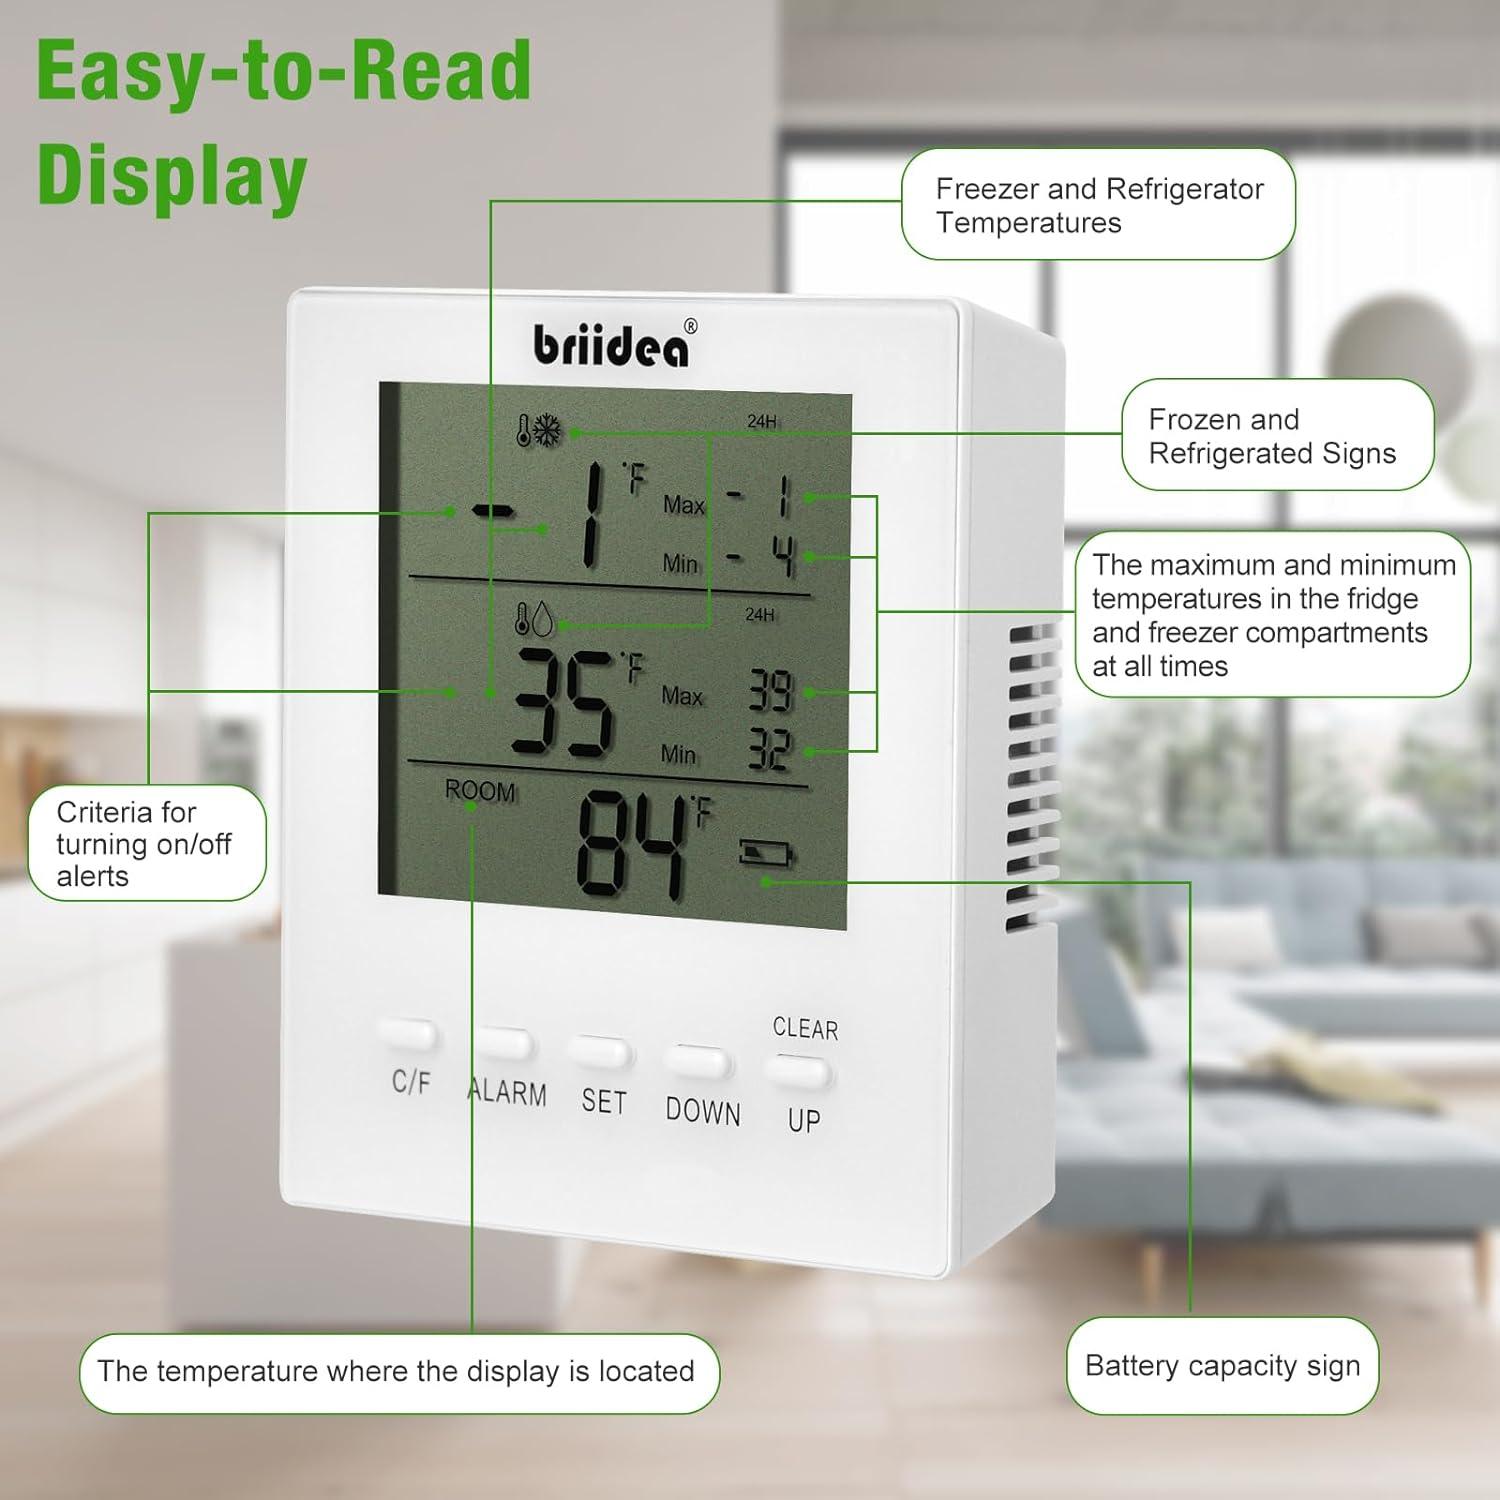 Freezer Temperature Alarm, Briidea Wireless Fridge and Freezer Thermometer with Alarm, Alerts for Max/Min Temperatures (-40℉ to 99℉), Prevent Food Spoilage - briidea